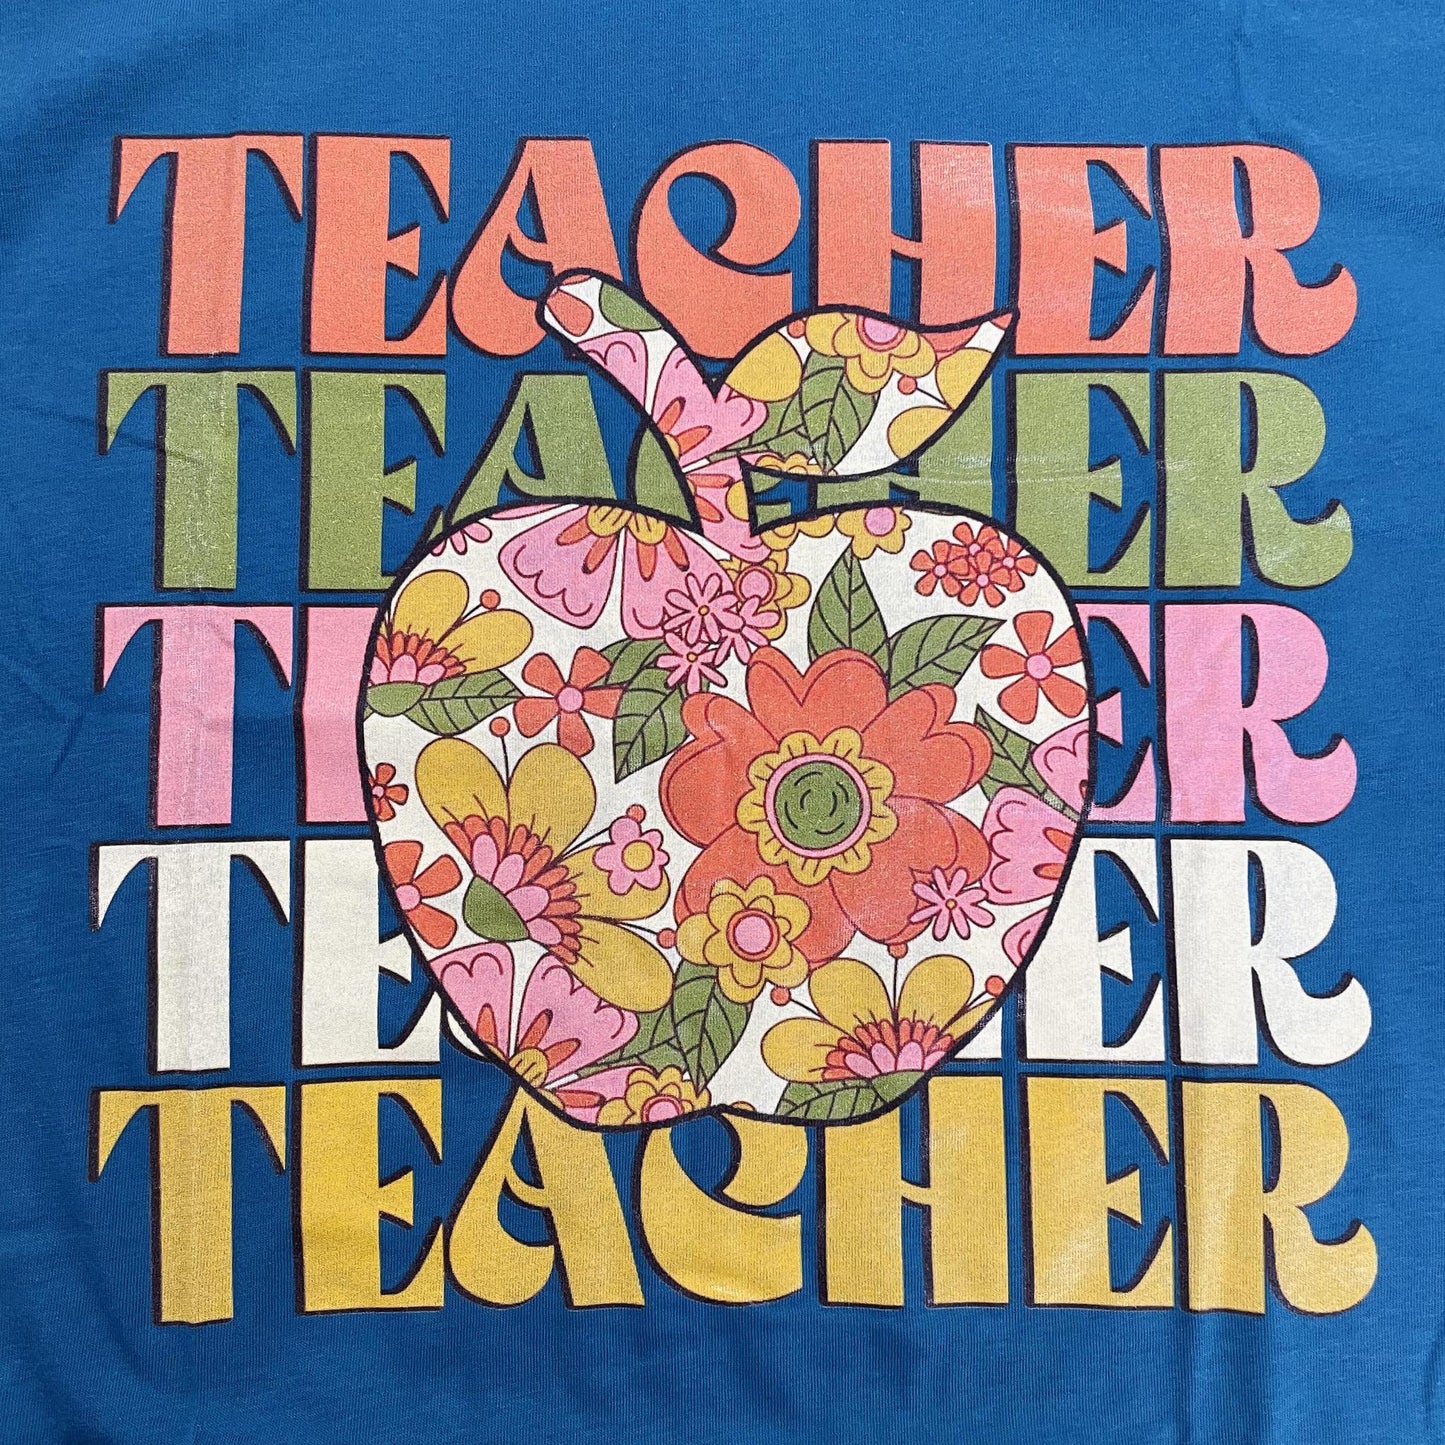 Retro Teacher- T-shirt